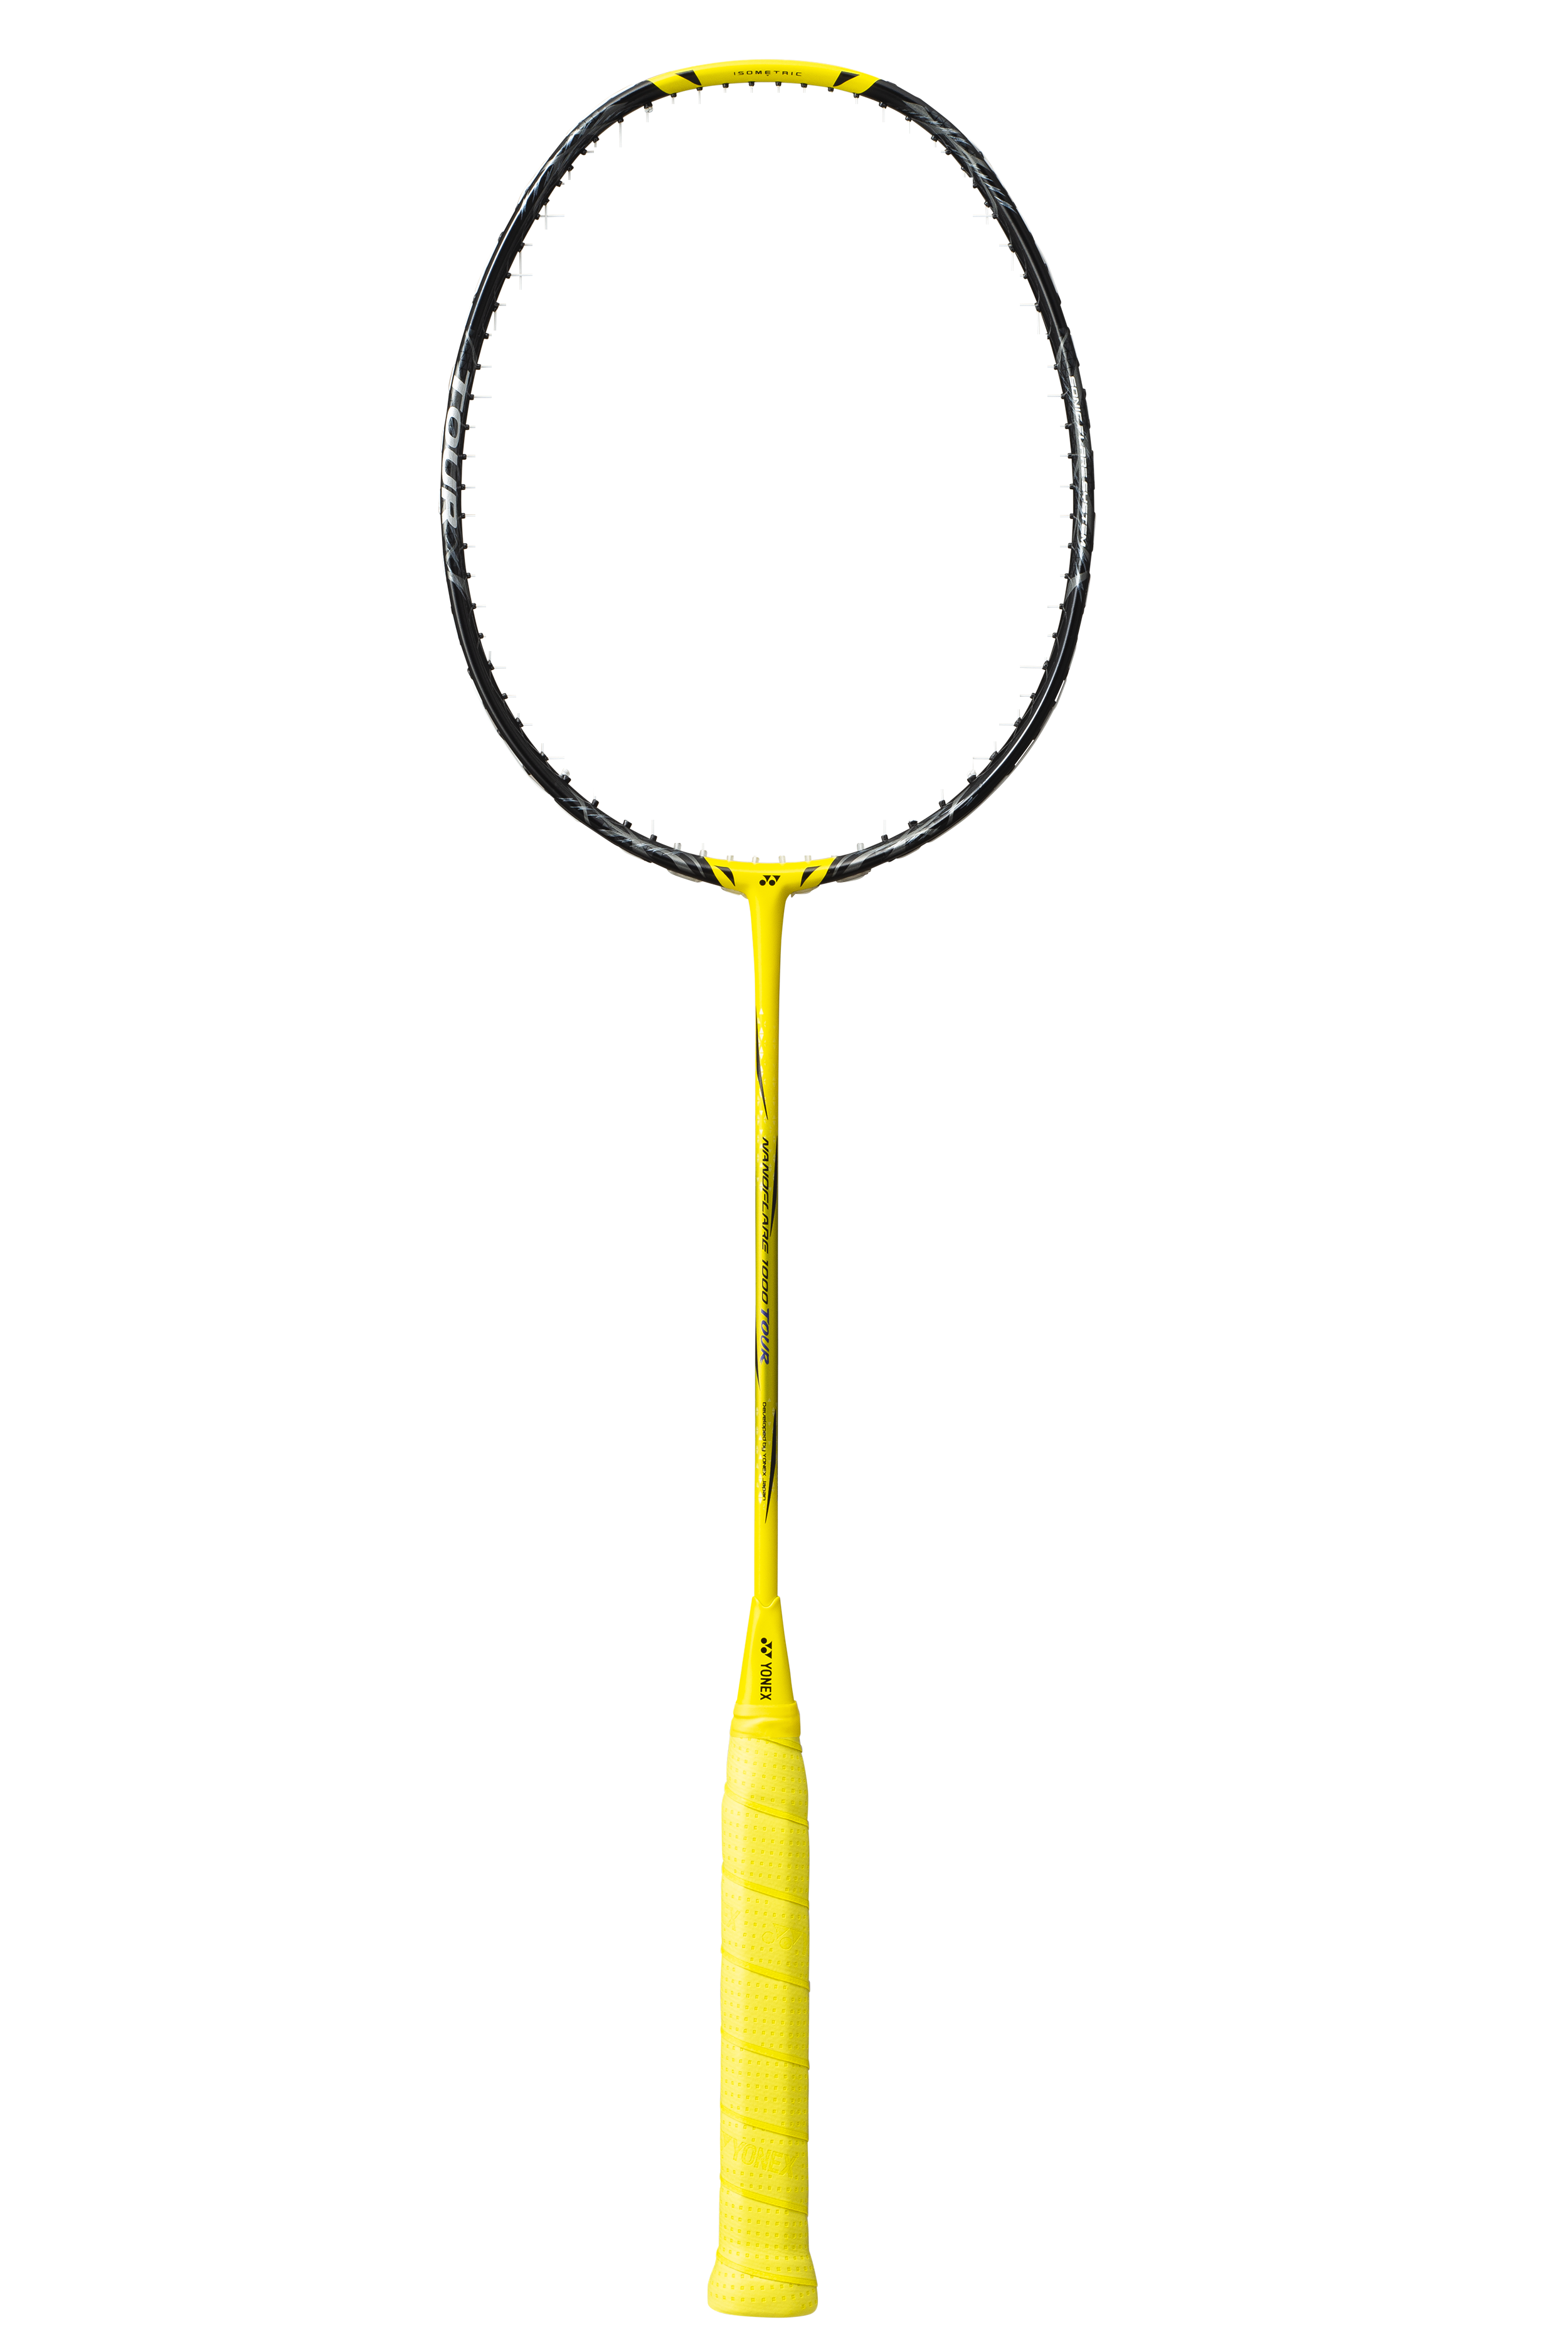 YONEX Nanoflare 1000 Tour Badminton Racquet - Lightning Yellow